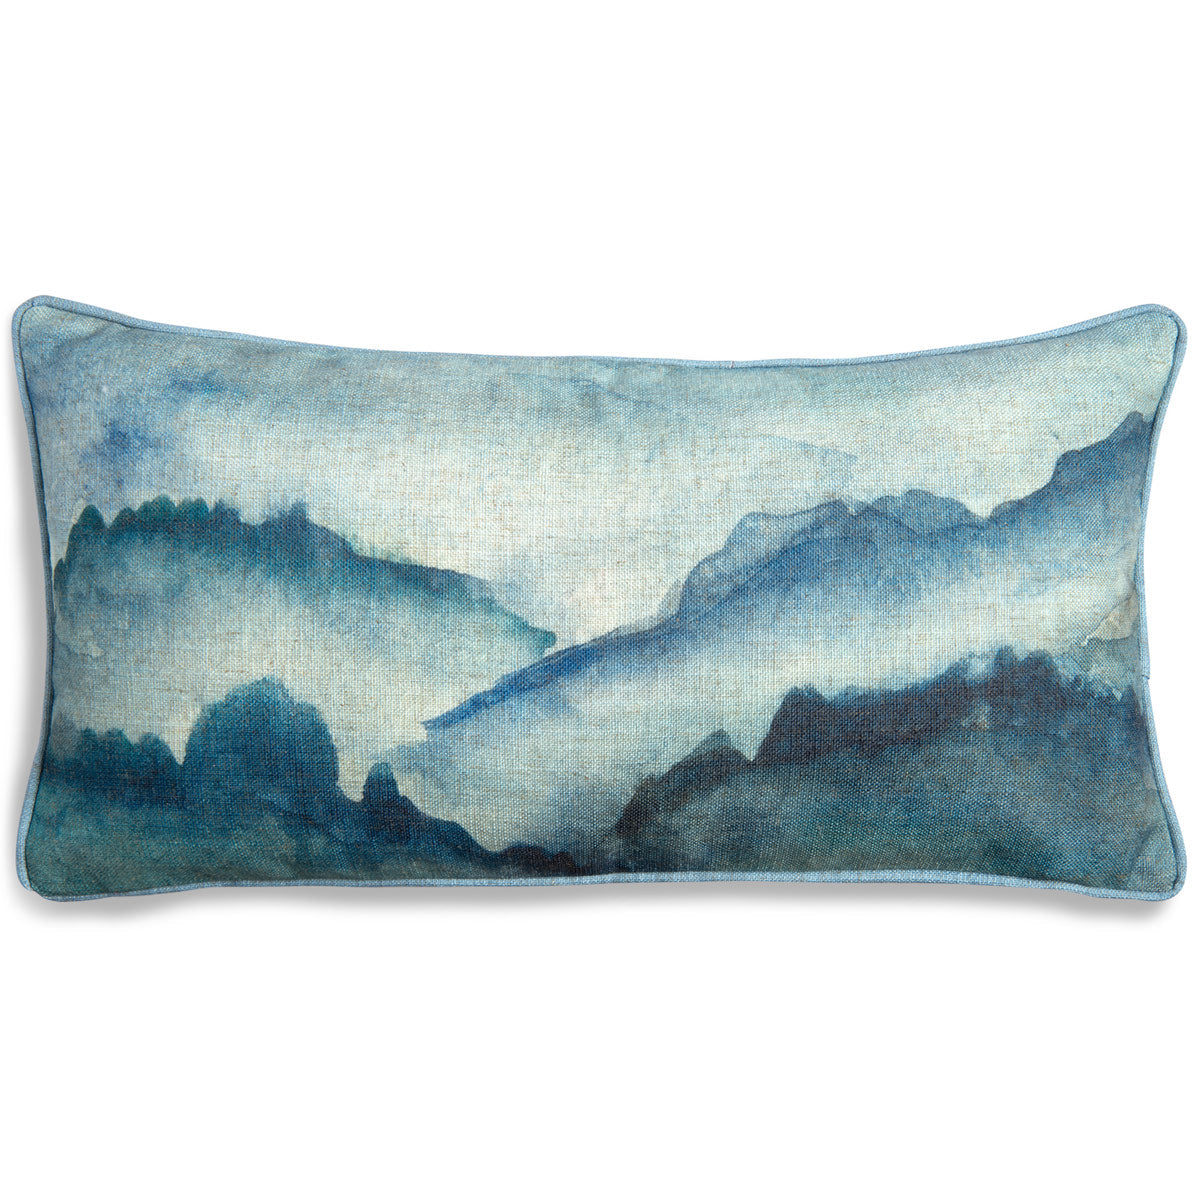 Abstract Landscape Lumbar Pillow - ModShop1.com